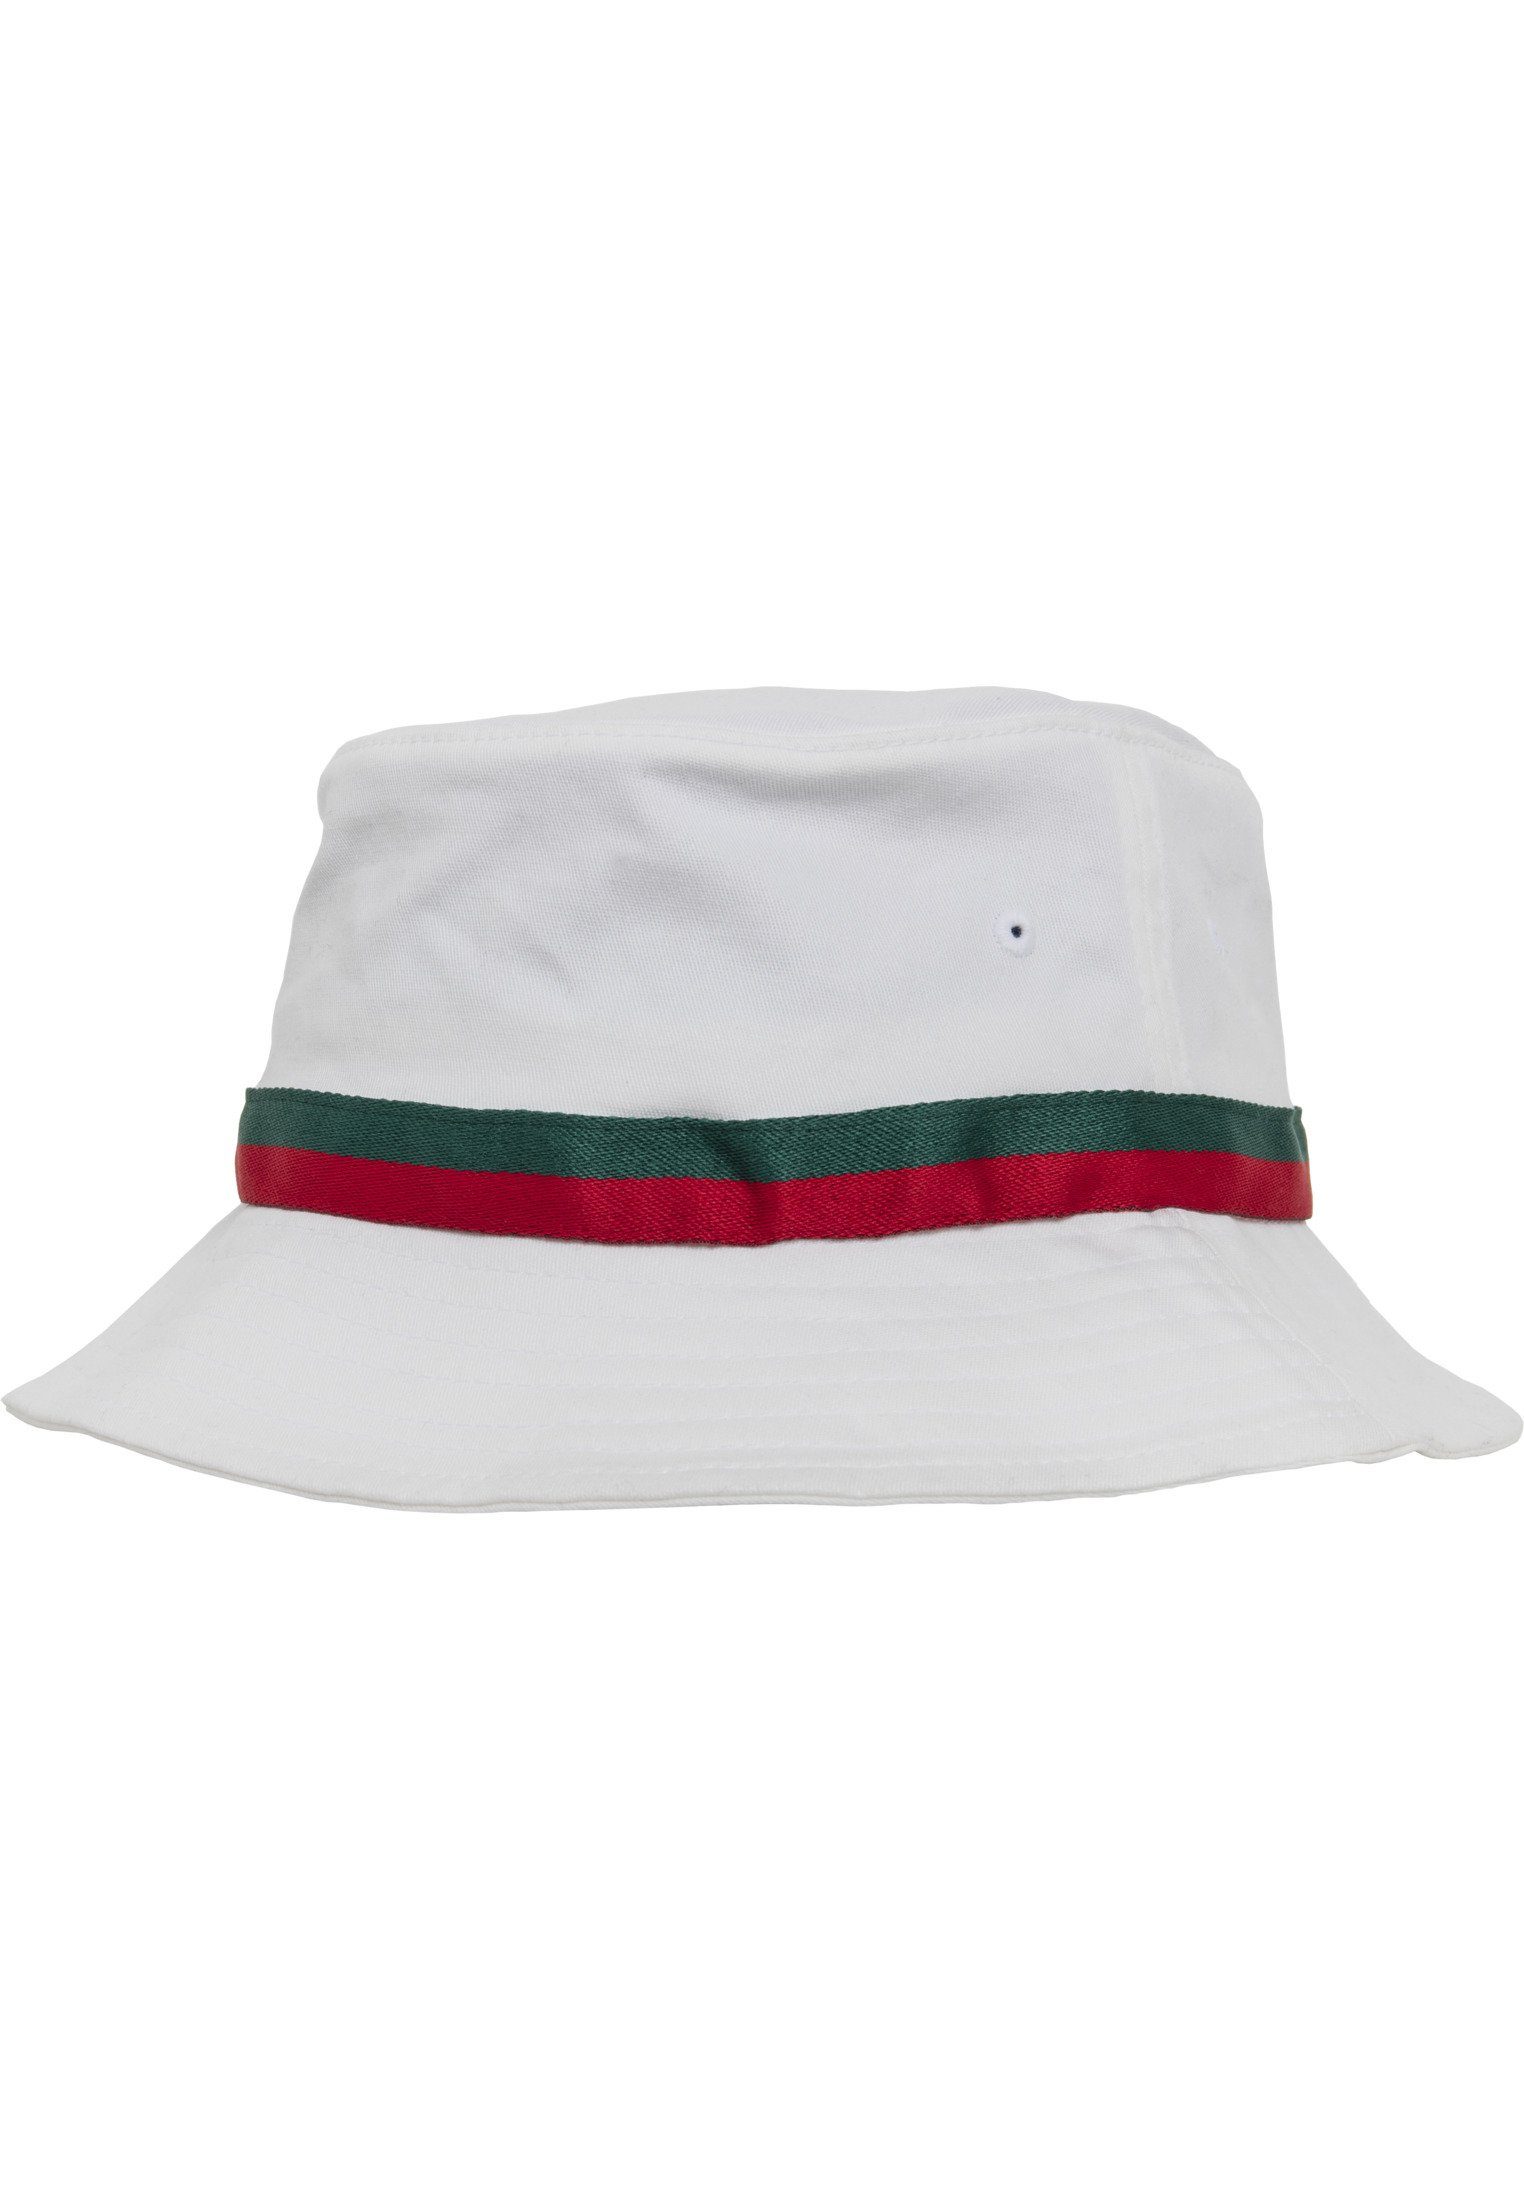 Flex Stripe white/firered/green Bucket Hat Hat Flexfit Bucket Cap